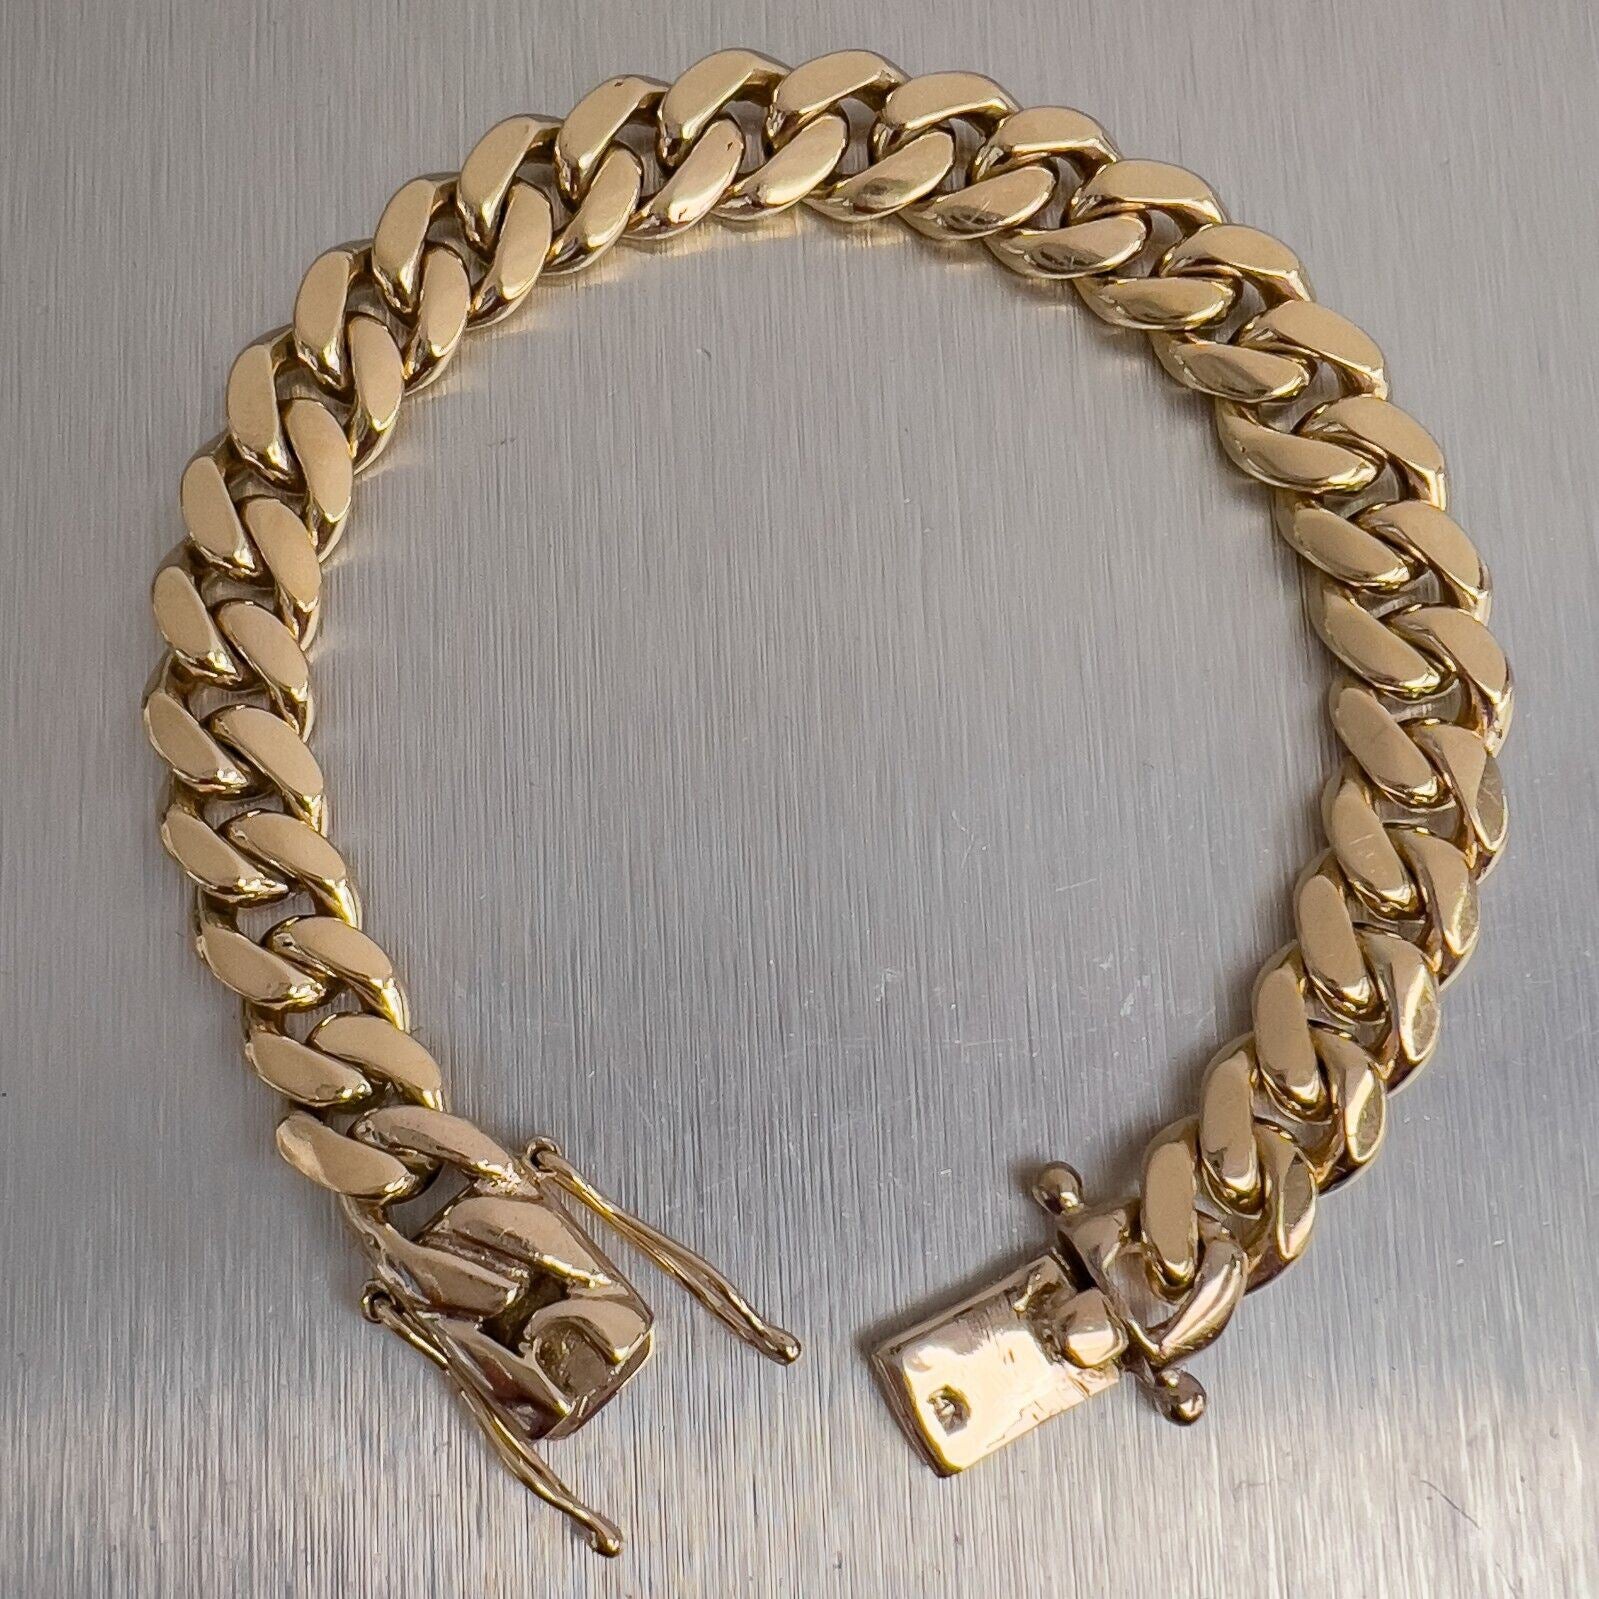 14k Yellow Gold Miami Cuban Link 9.60mm Bracelet 7" 45.2g w/ Box Clasp